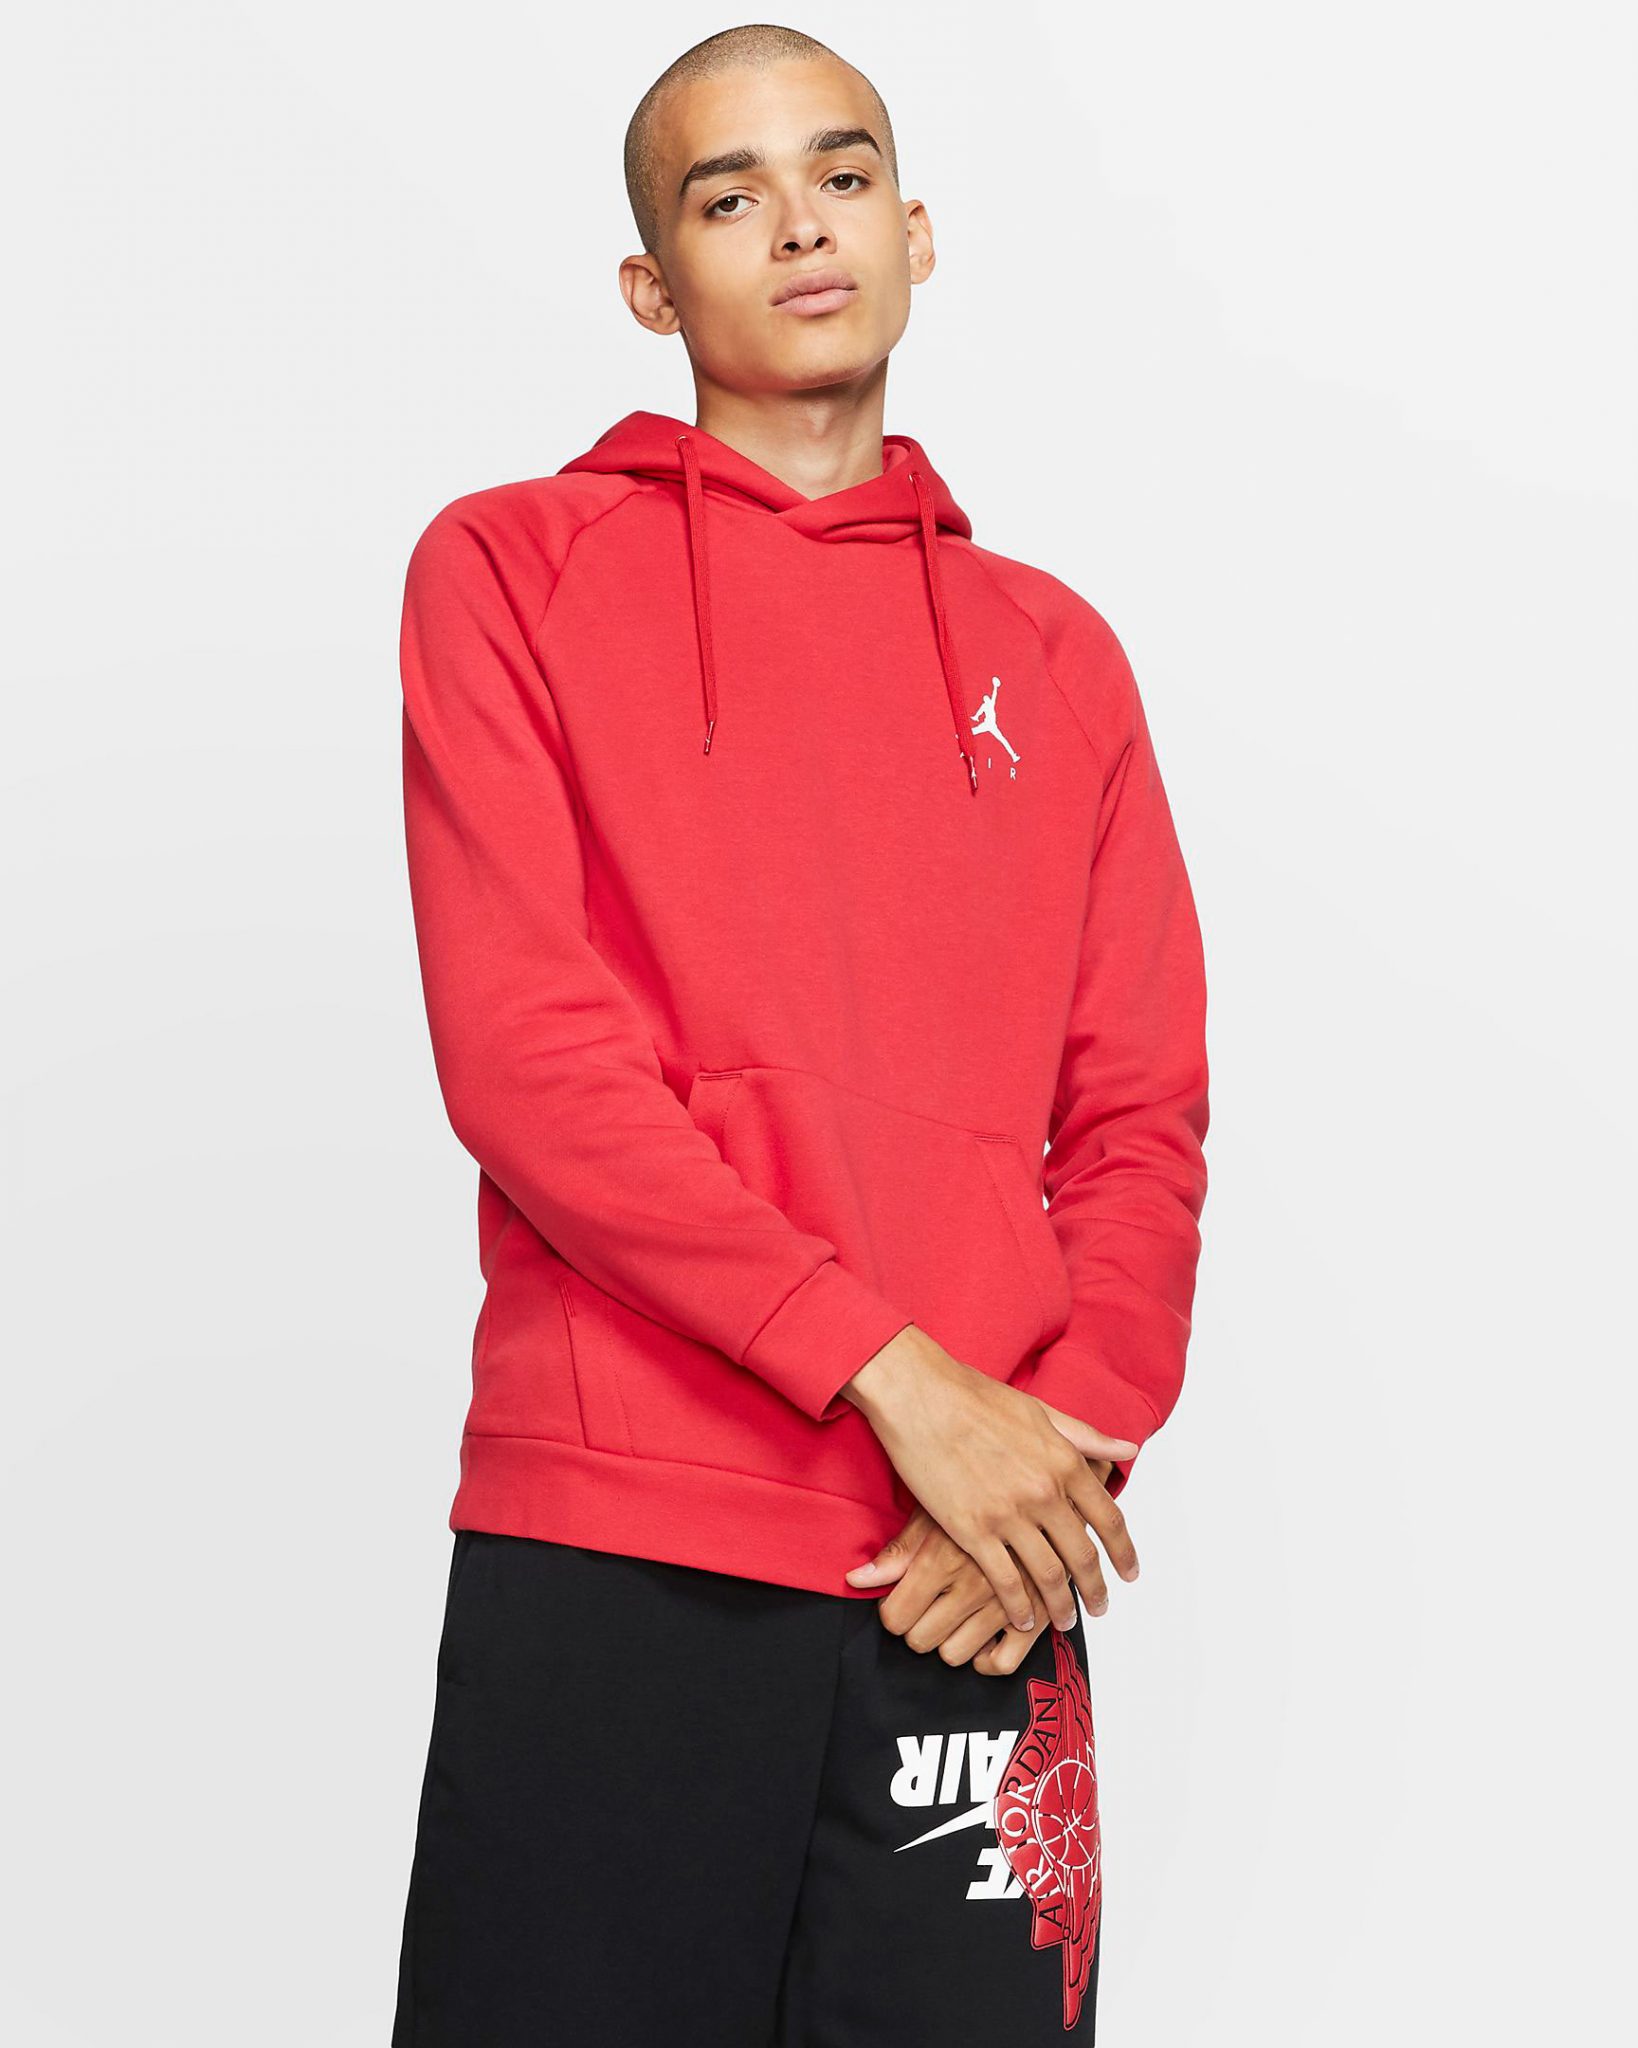 Air Jordan 4 Winter Clothing and Hat Match | SneakerFits.com